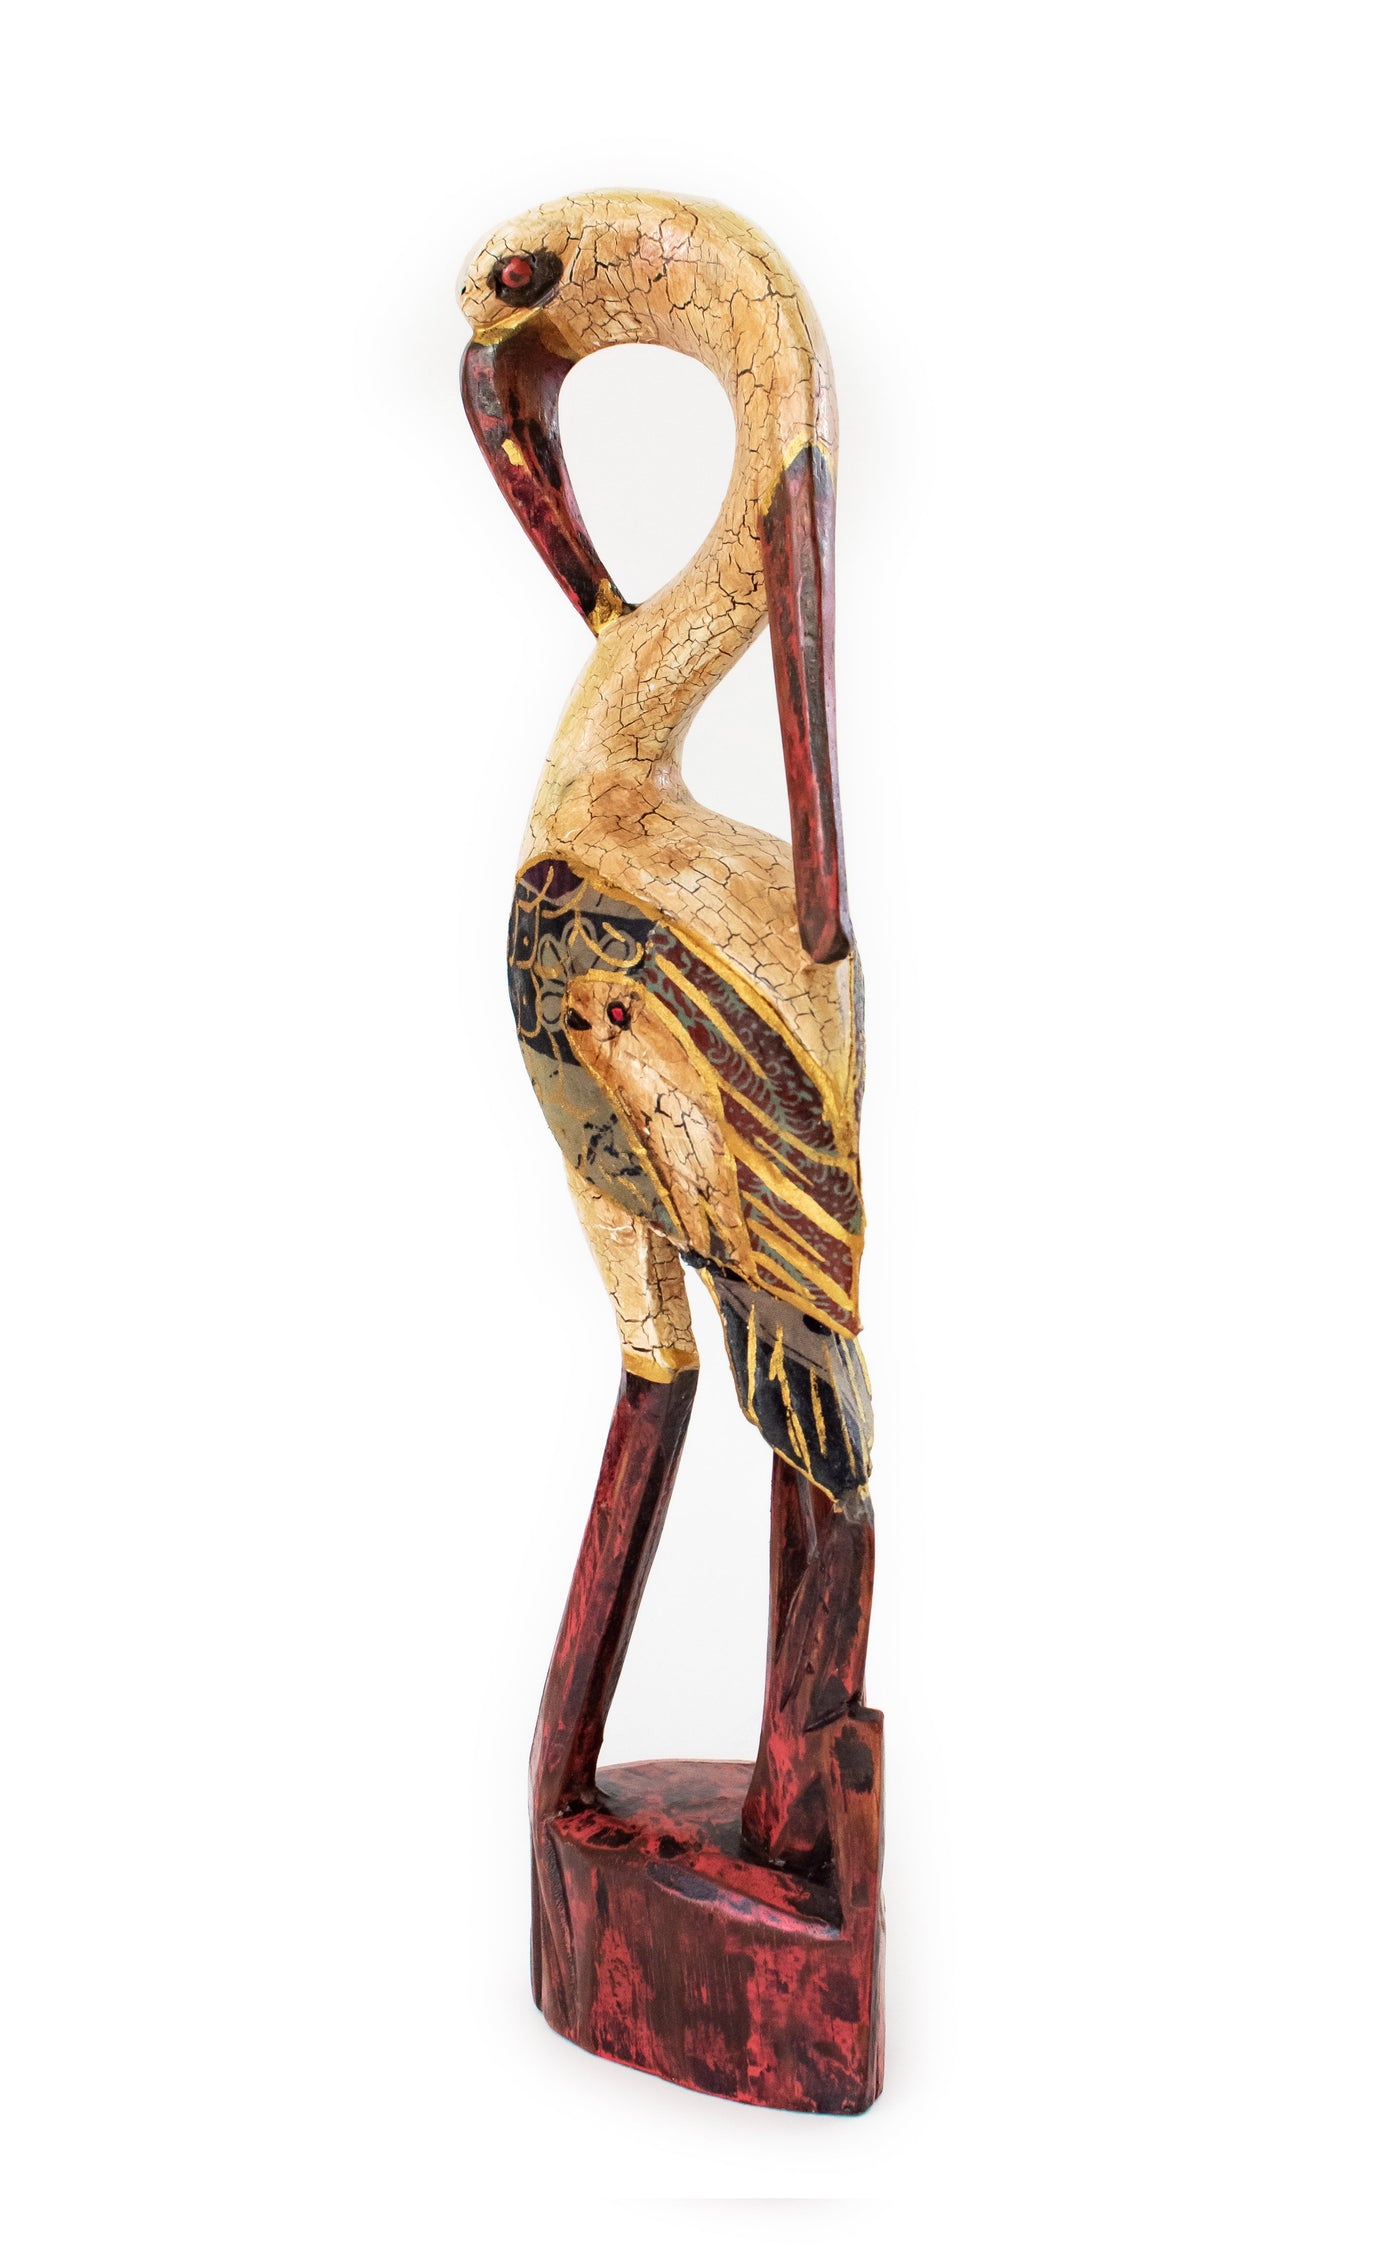 16" Wooden Hand Carved Heron Bird Statue Figurine Sculpture Art Decorative Home Decor Accent Gift Handcrafted Decoration Handmade